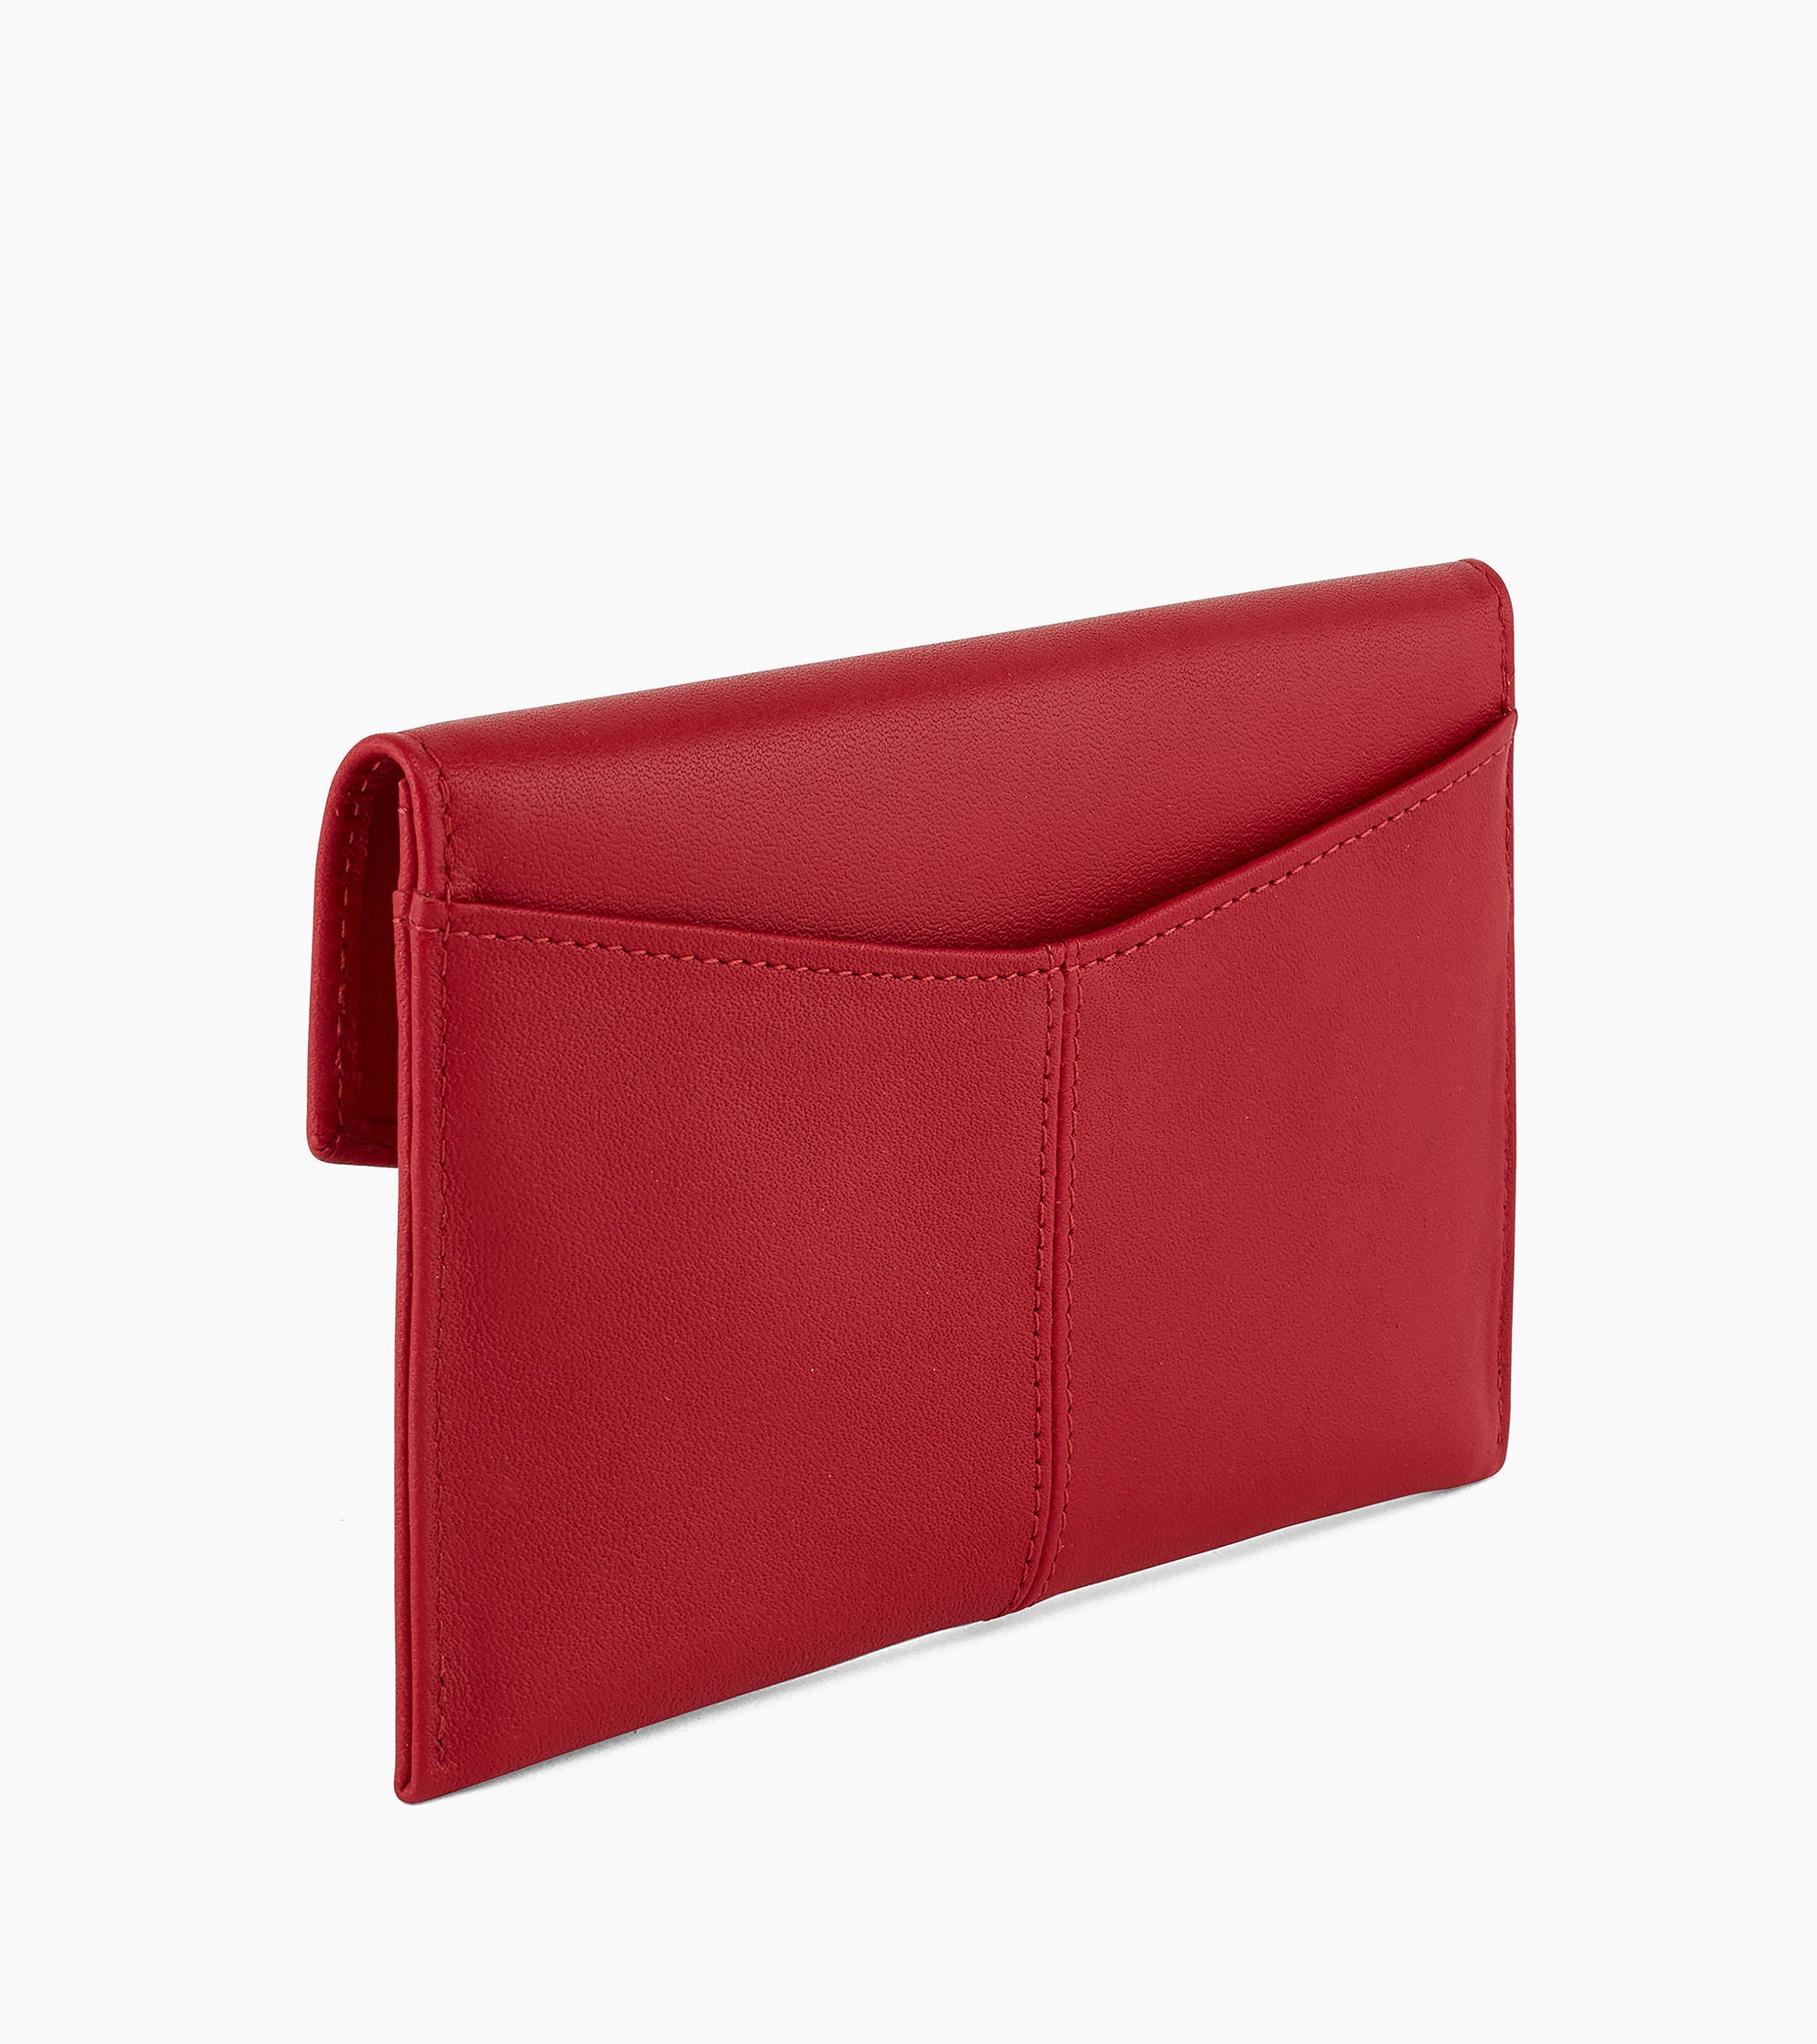 Medium Charlotte smooth leather envelope bag